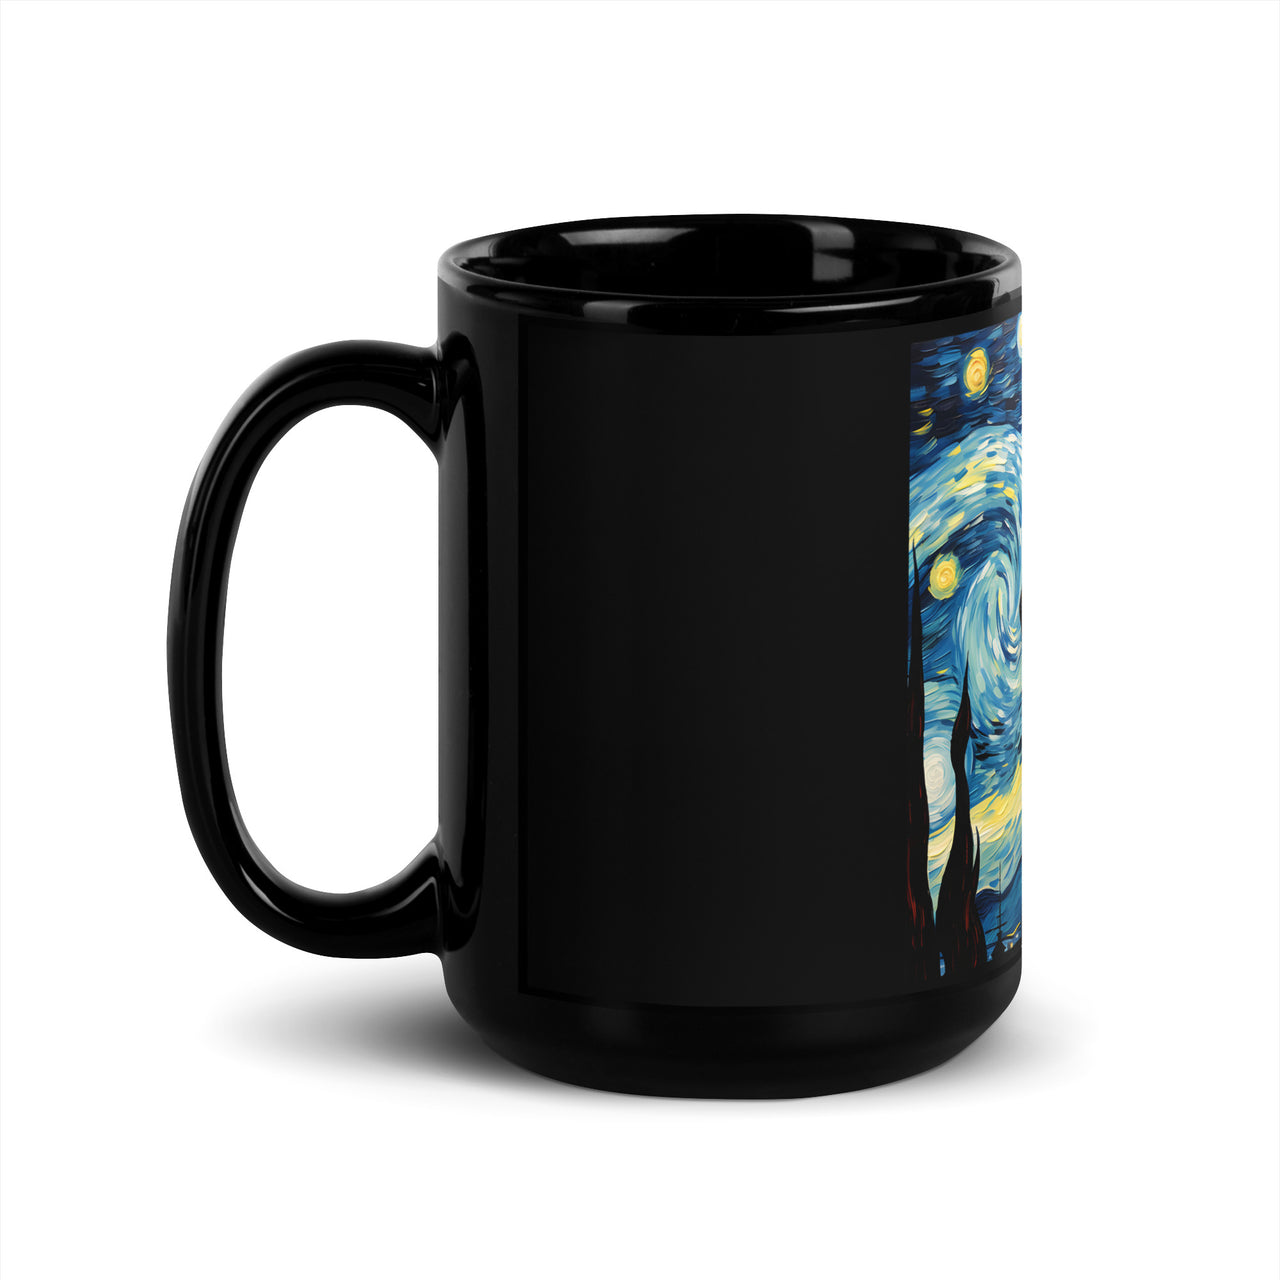 A Starry Black Cat Night Van Gogh Black Mug